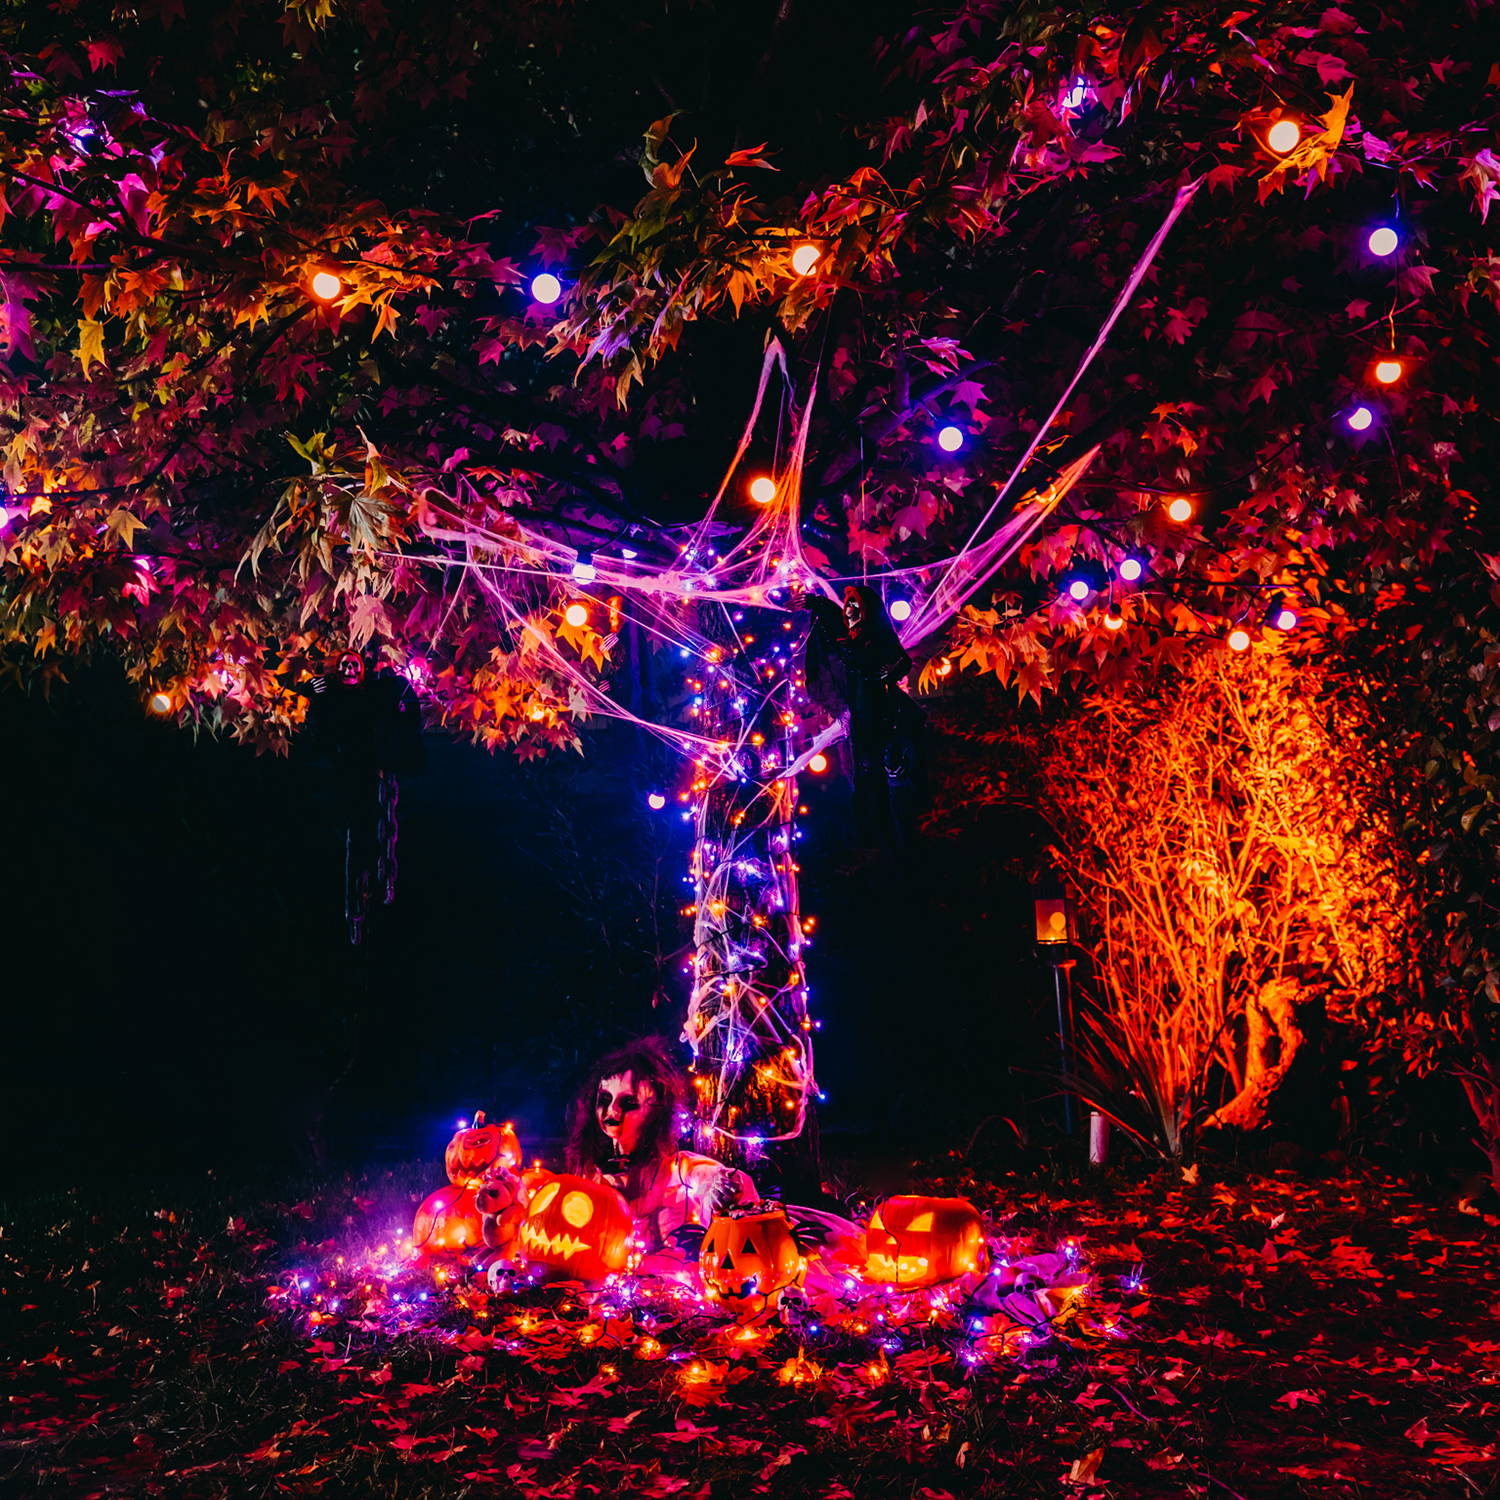 Halloween themed Twinkly lighting tree display with pumpkins and orange and purple lights